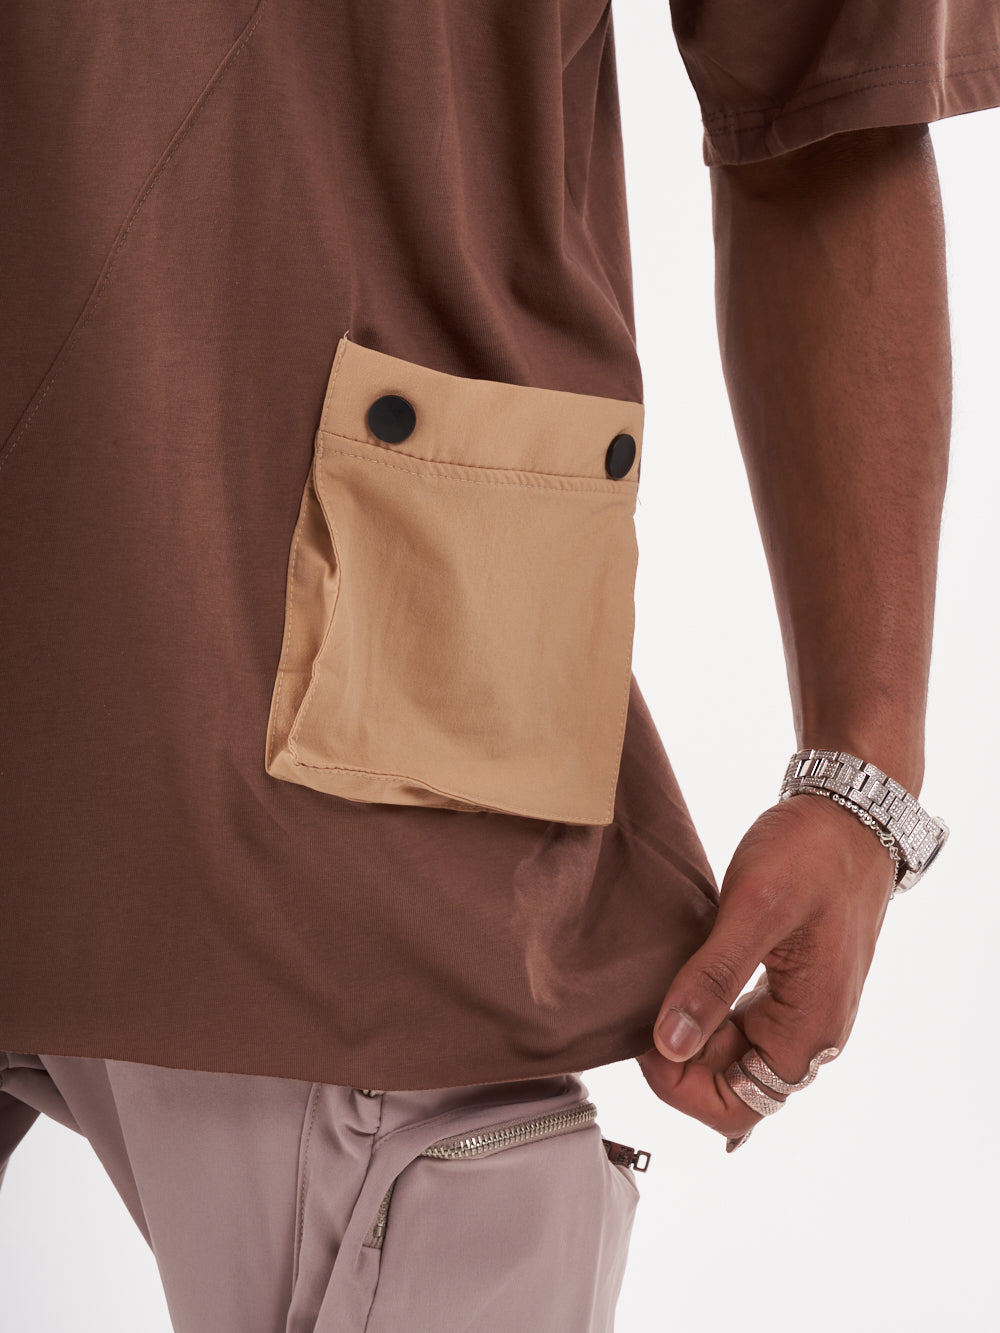 A man wearing a BEATNIK T-SHIRT with a brown pocket.